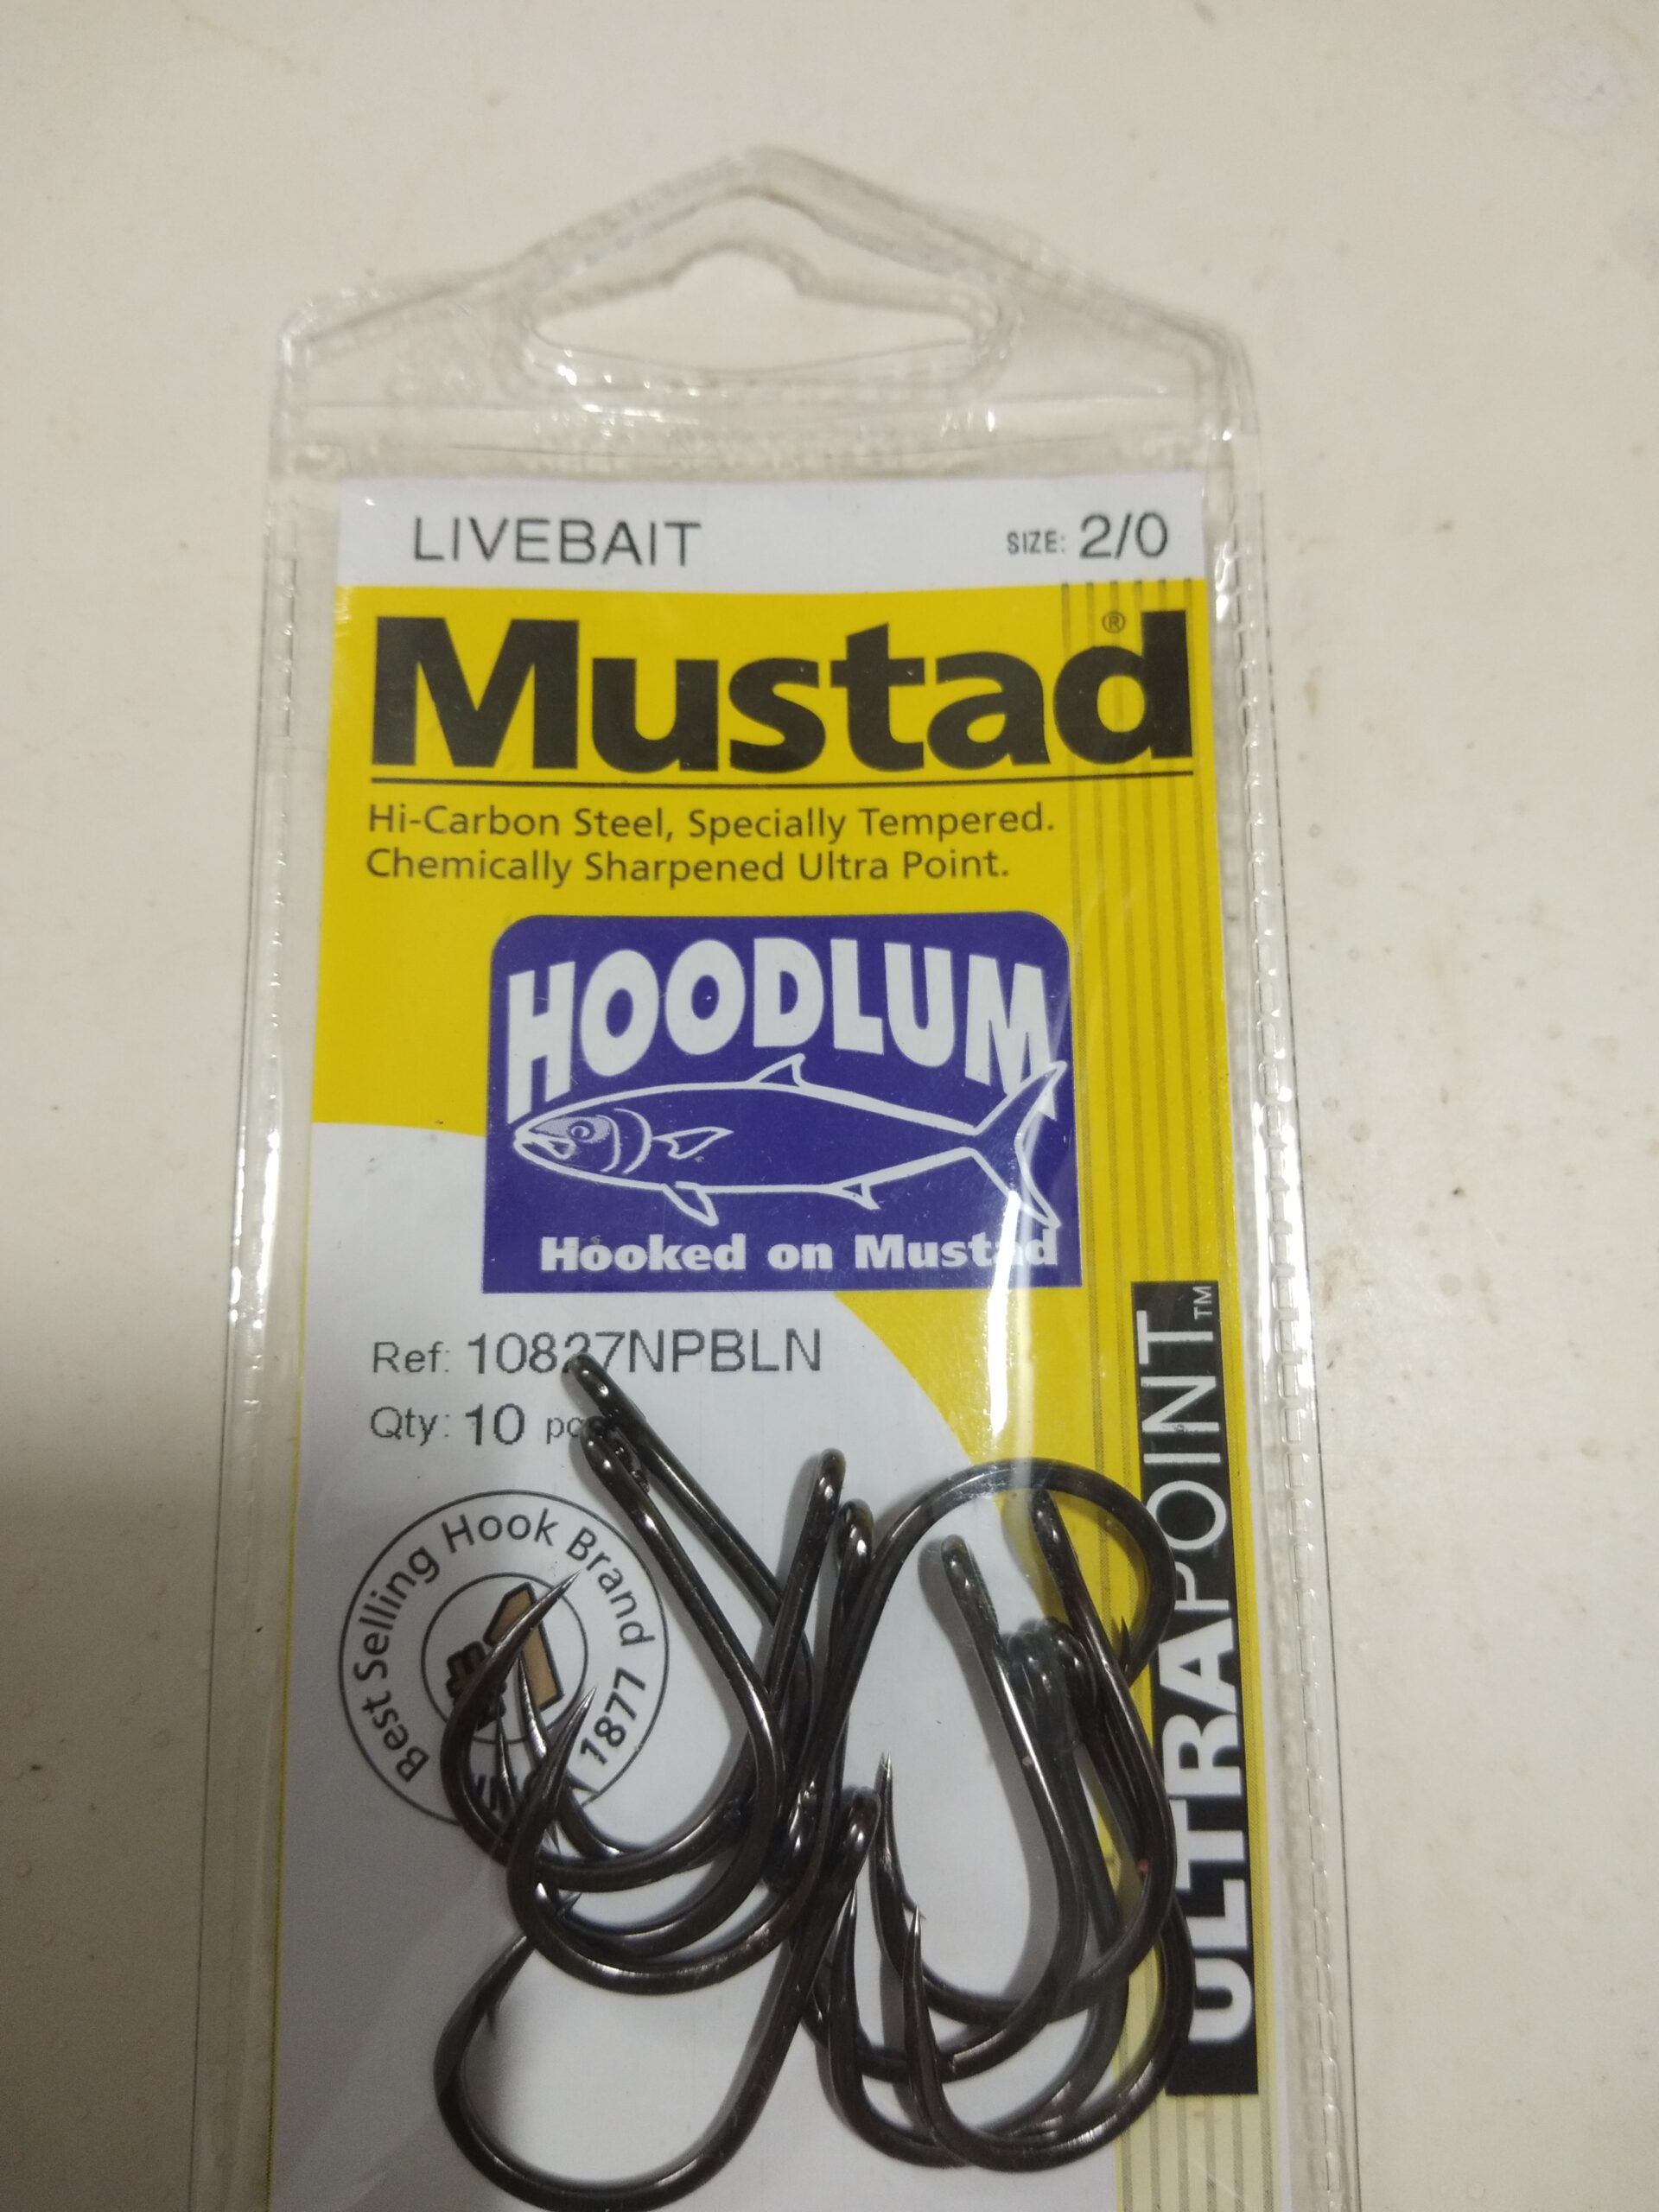 Livebait Mustad Hoodlum Hooks – First Catch